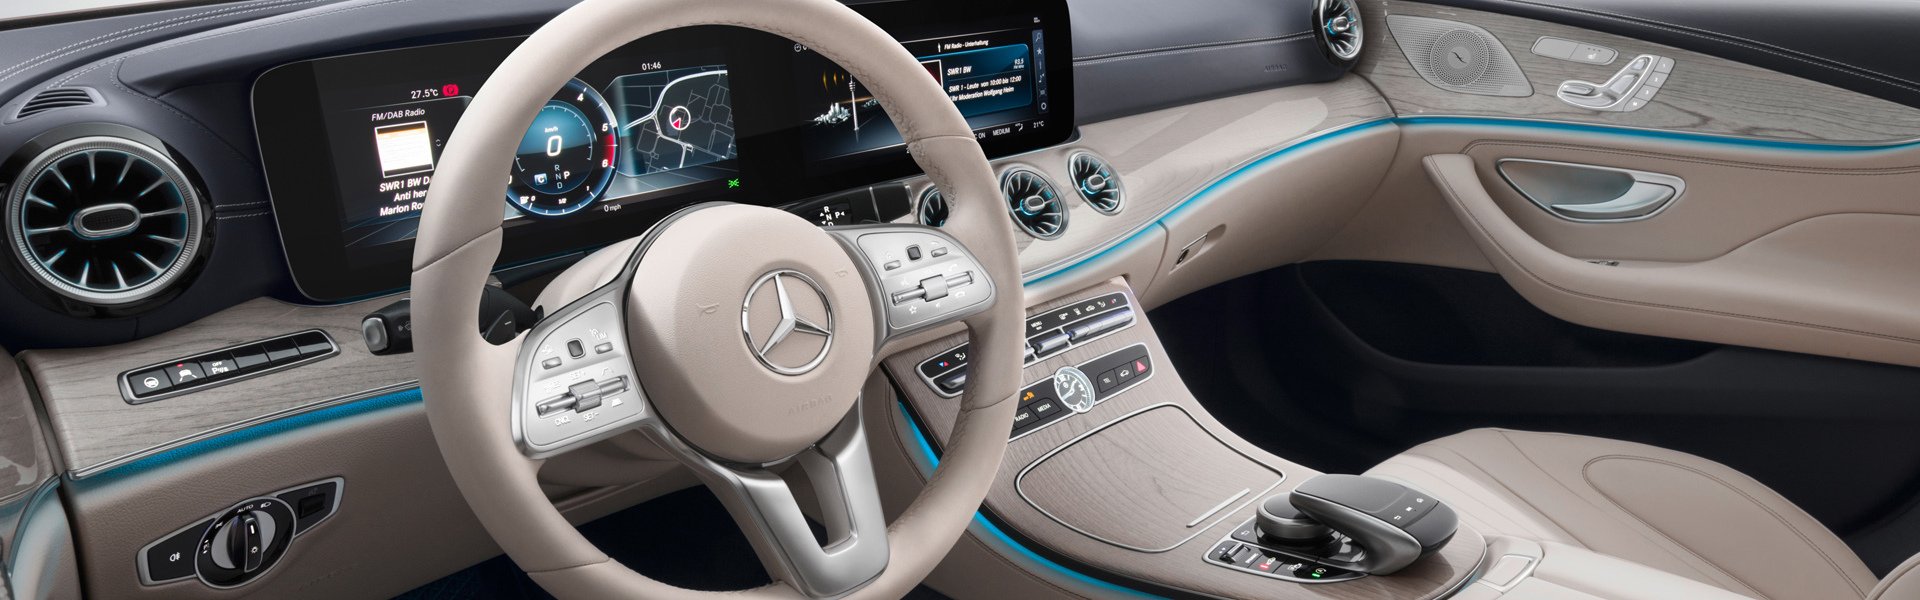 Mercedes-AMG CLS купе